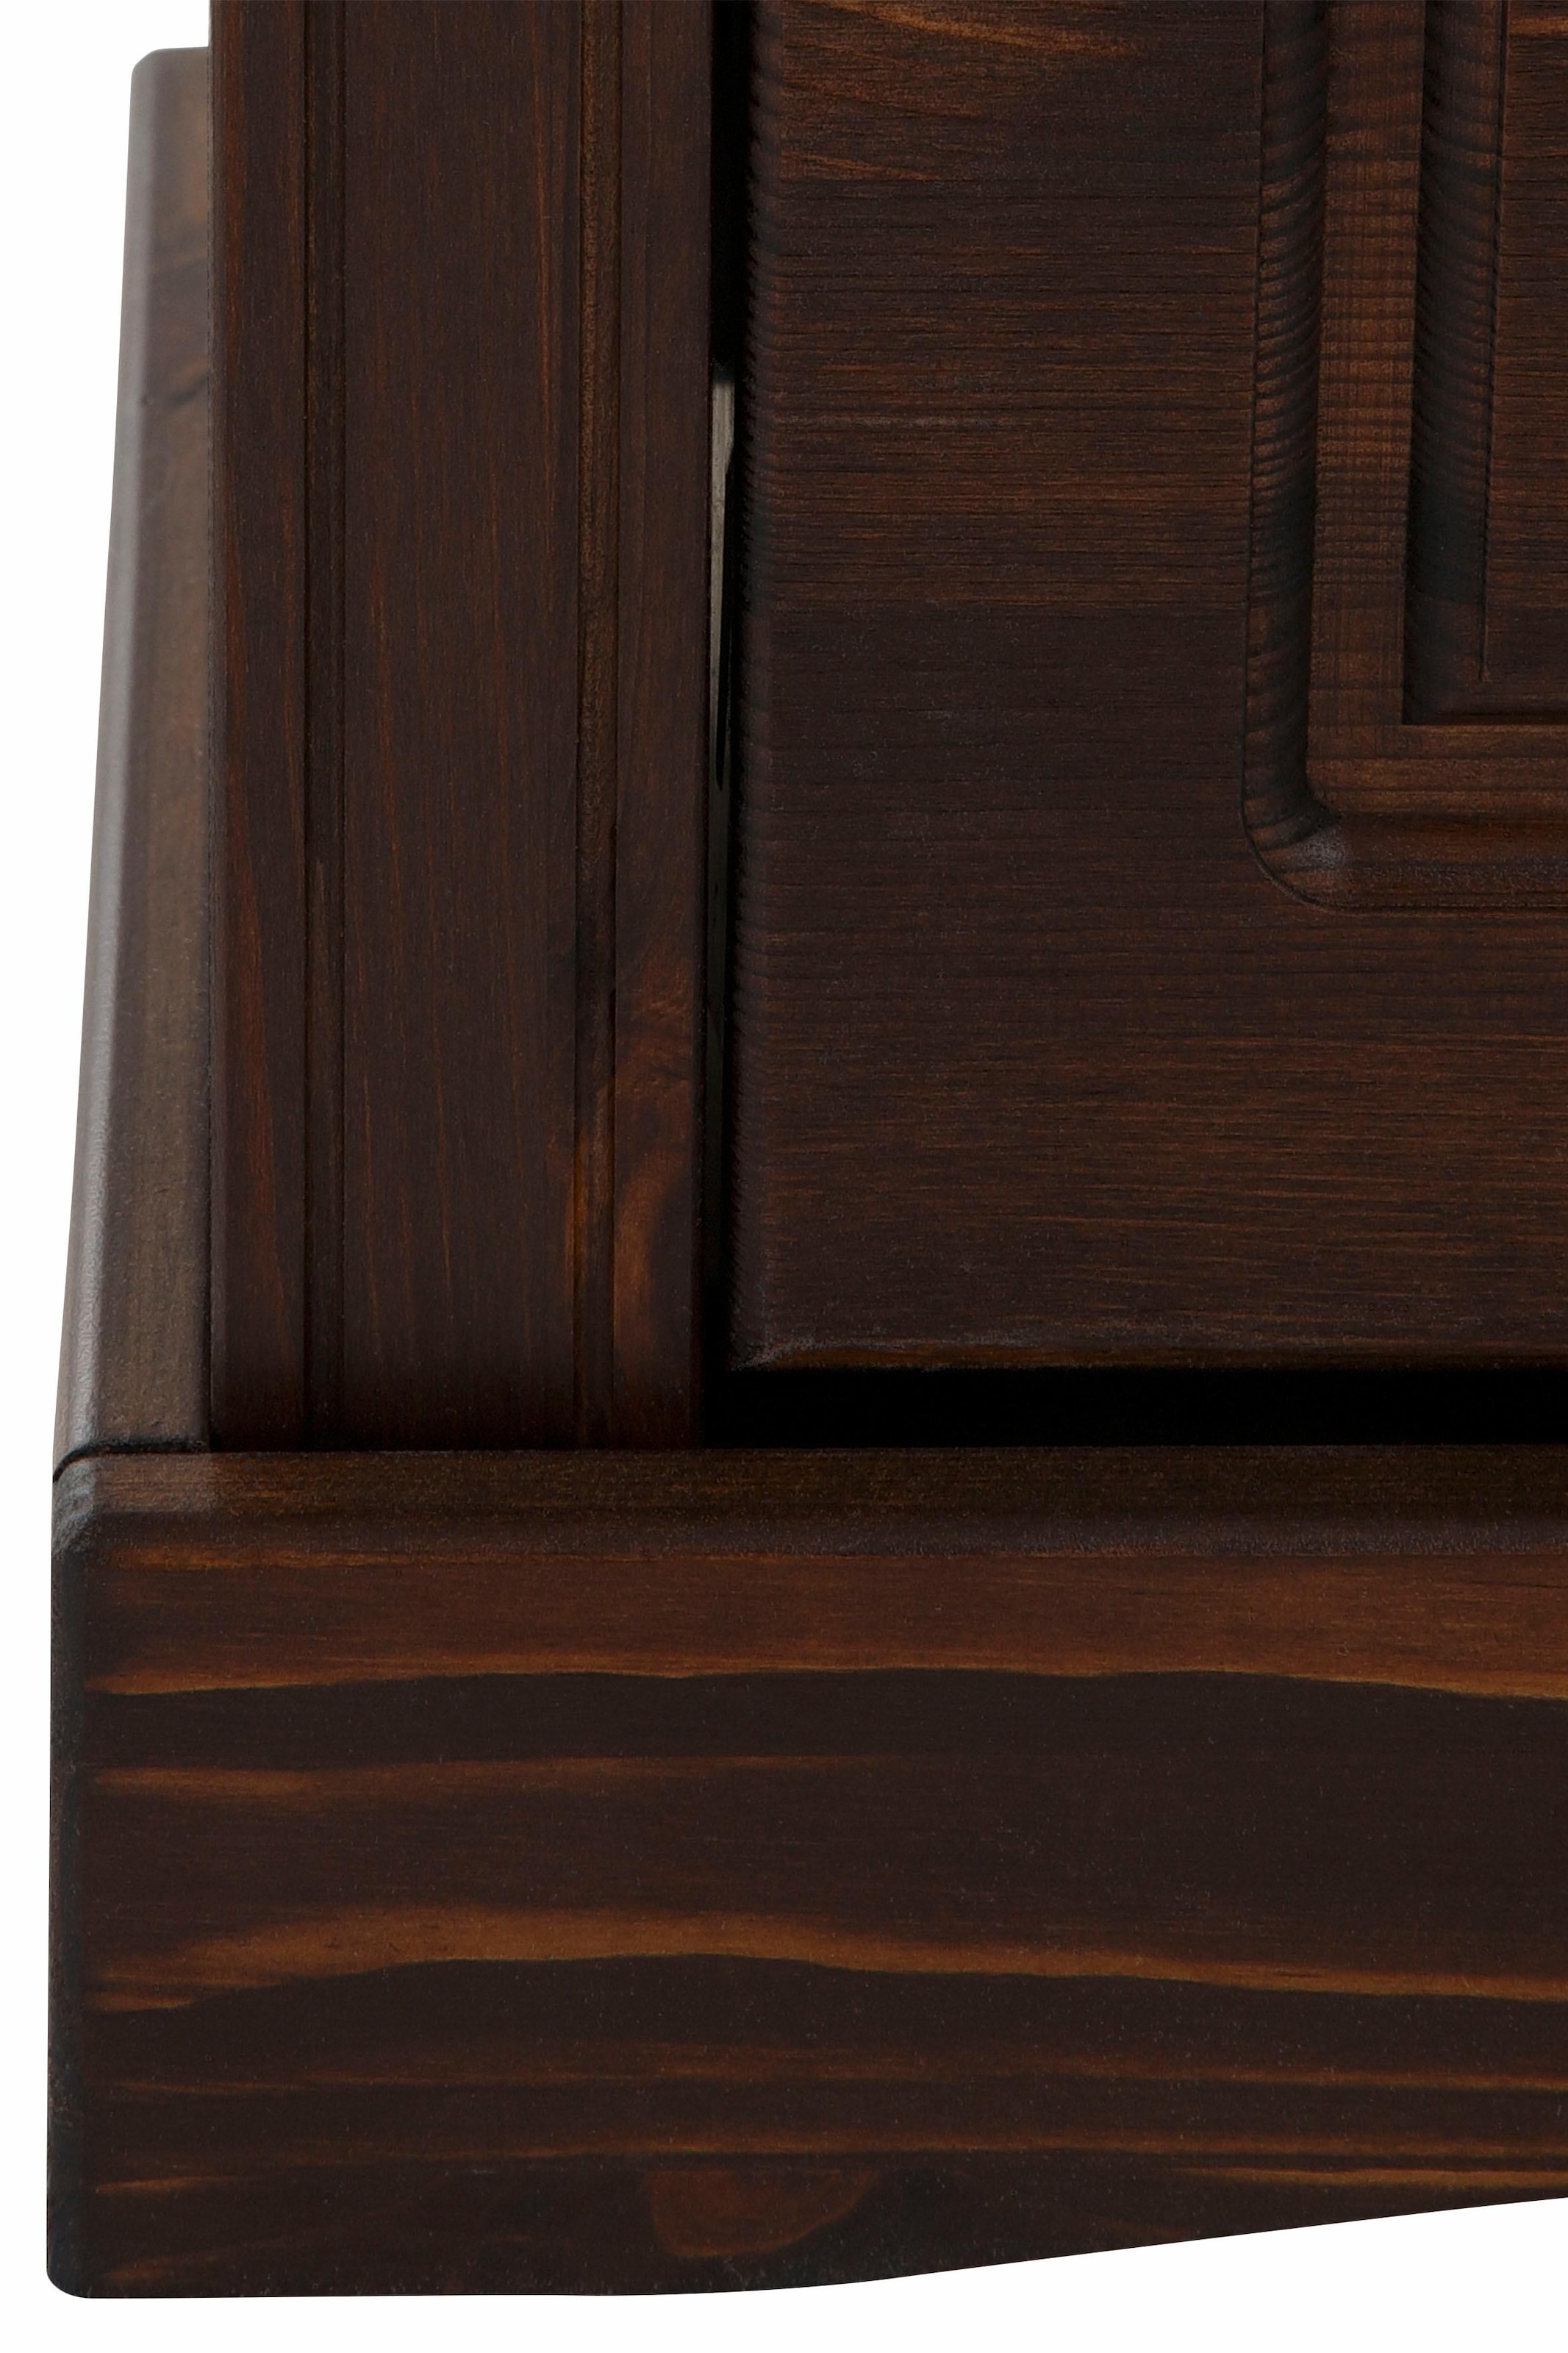 Home affaire Schuhkommode »Rustic«, aus massiver Kiefer, Breite 130 cm, FSC®-zertifiziert